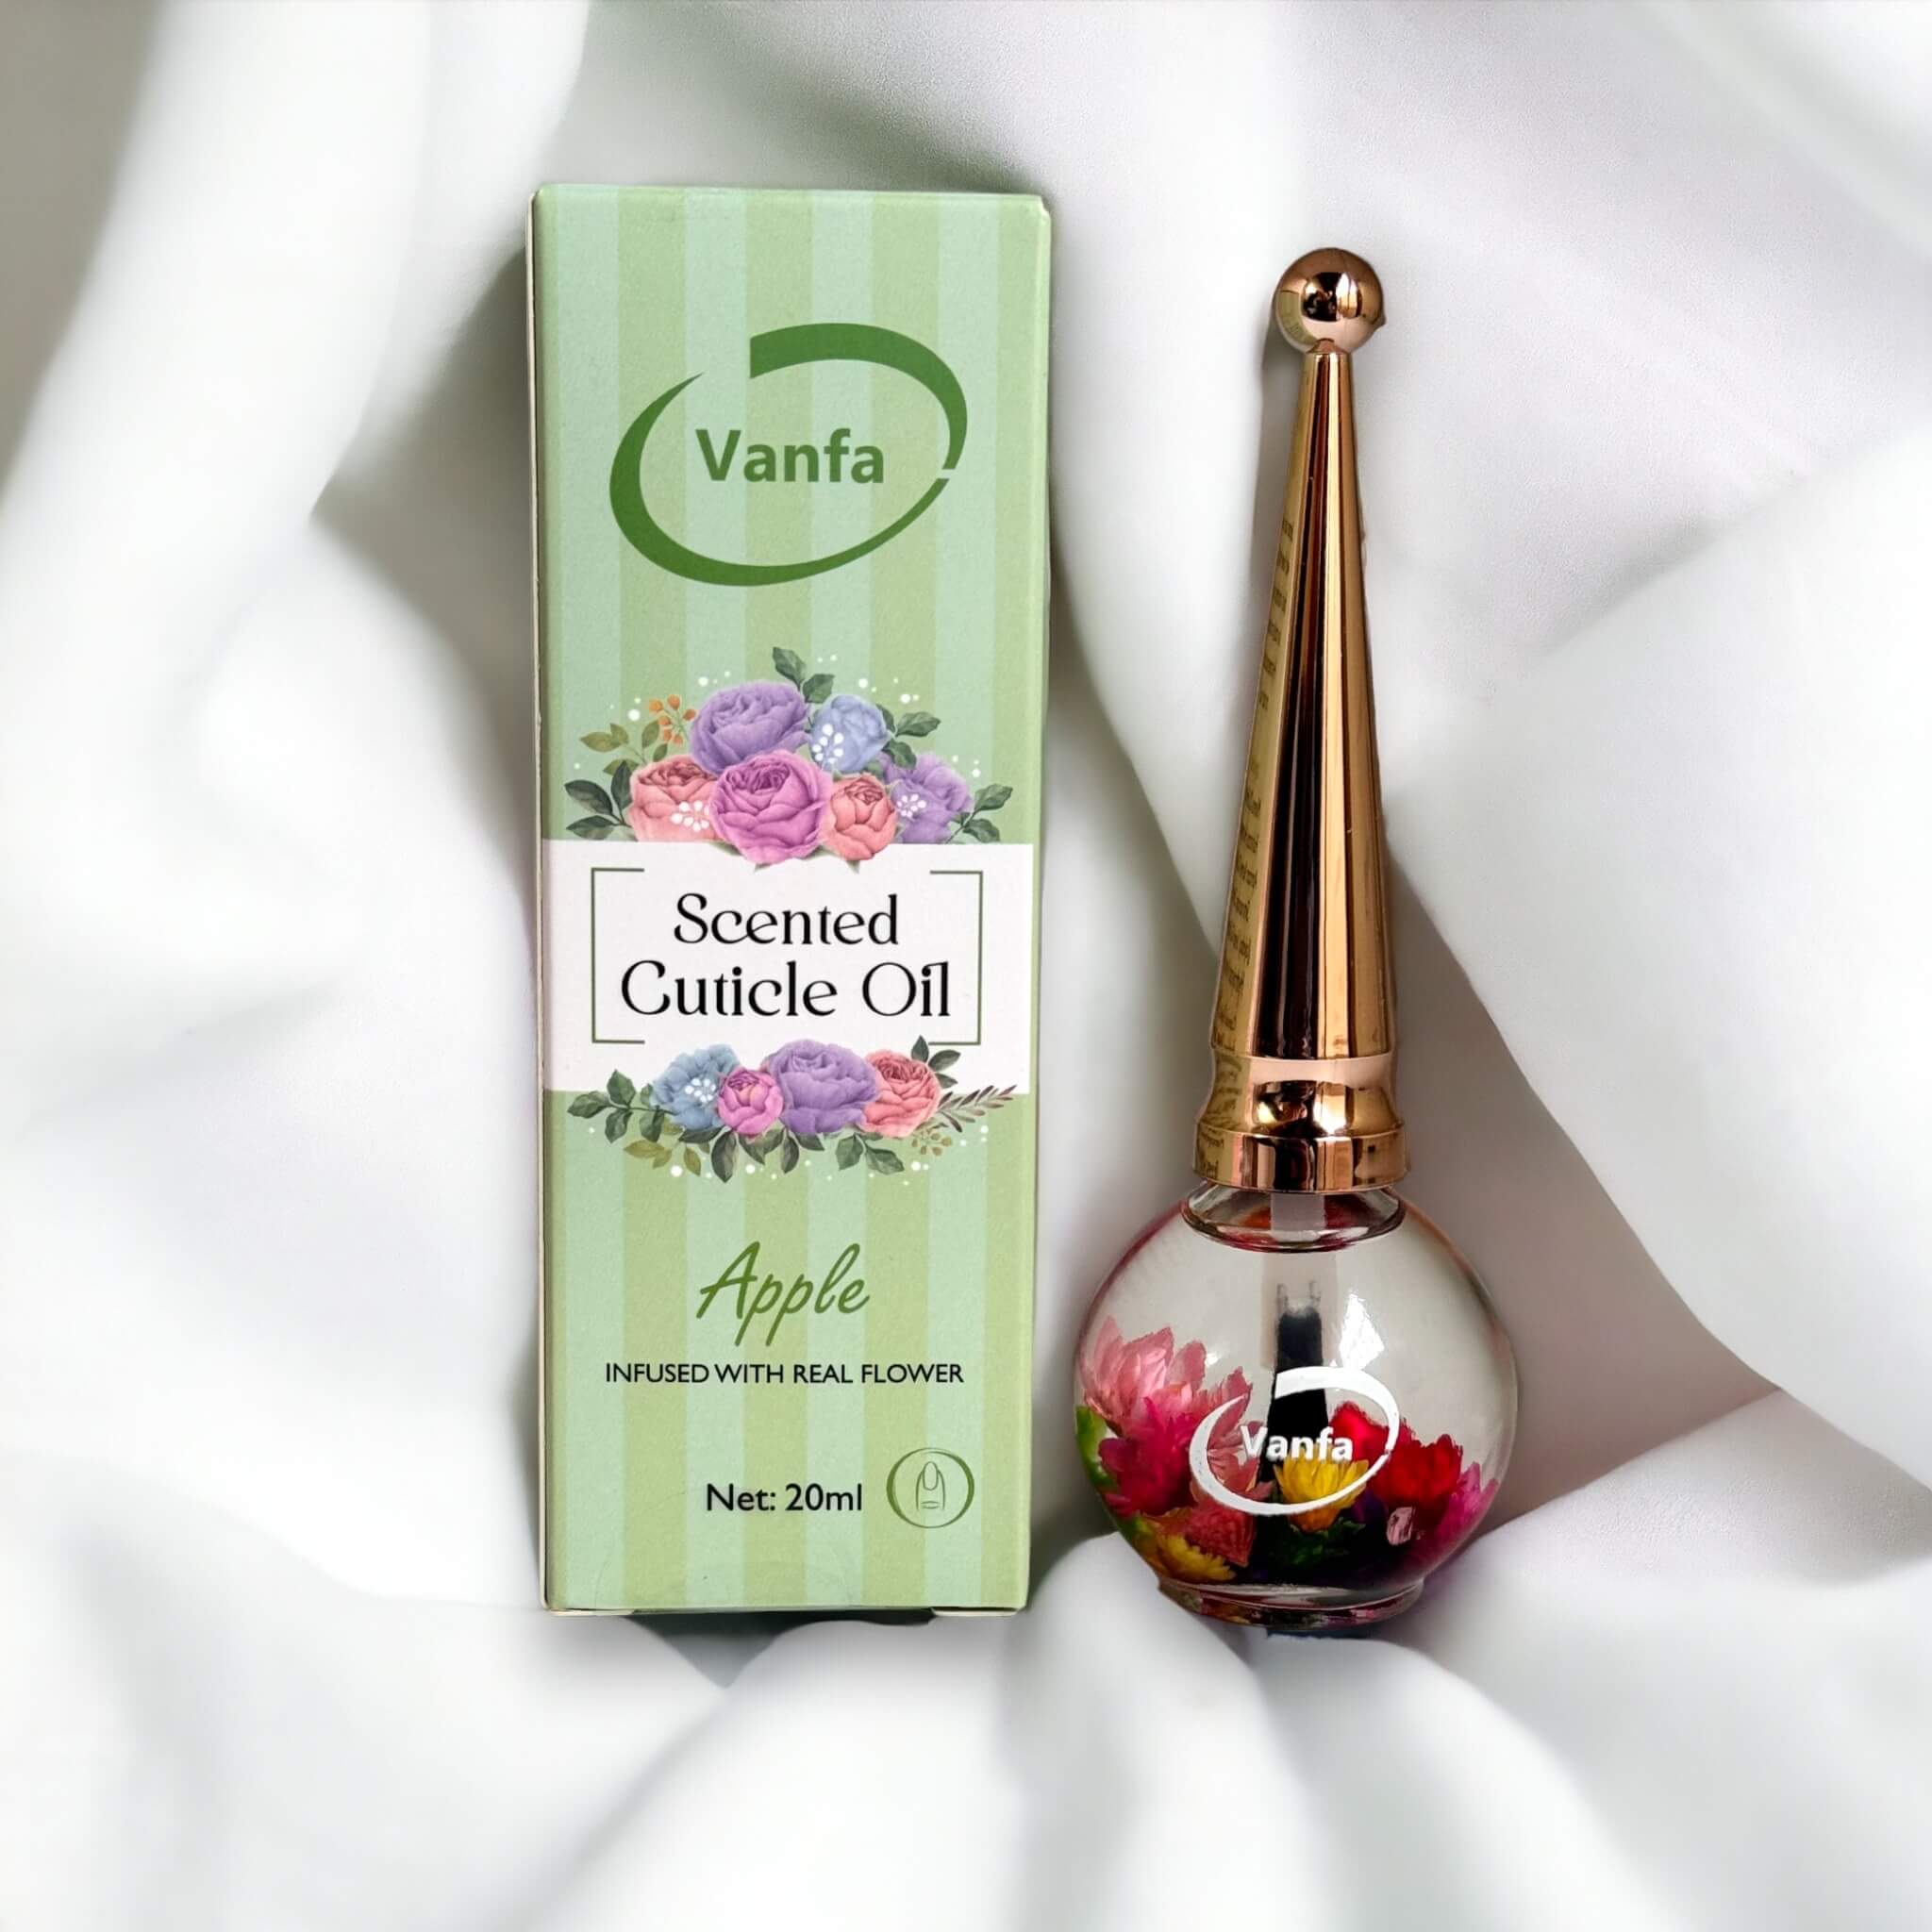 VANFA Cuticle Oil infused with real flower 0.42 Oz - Apple